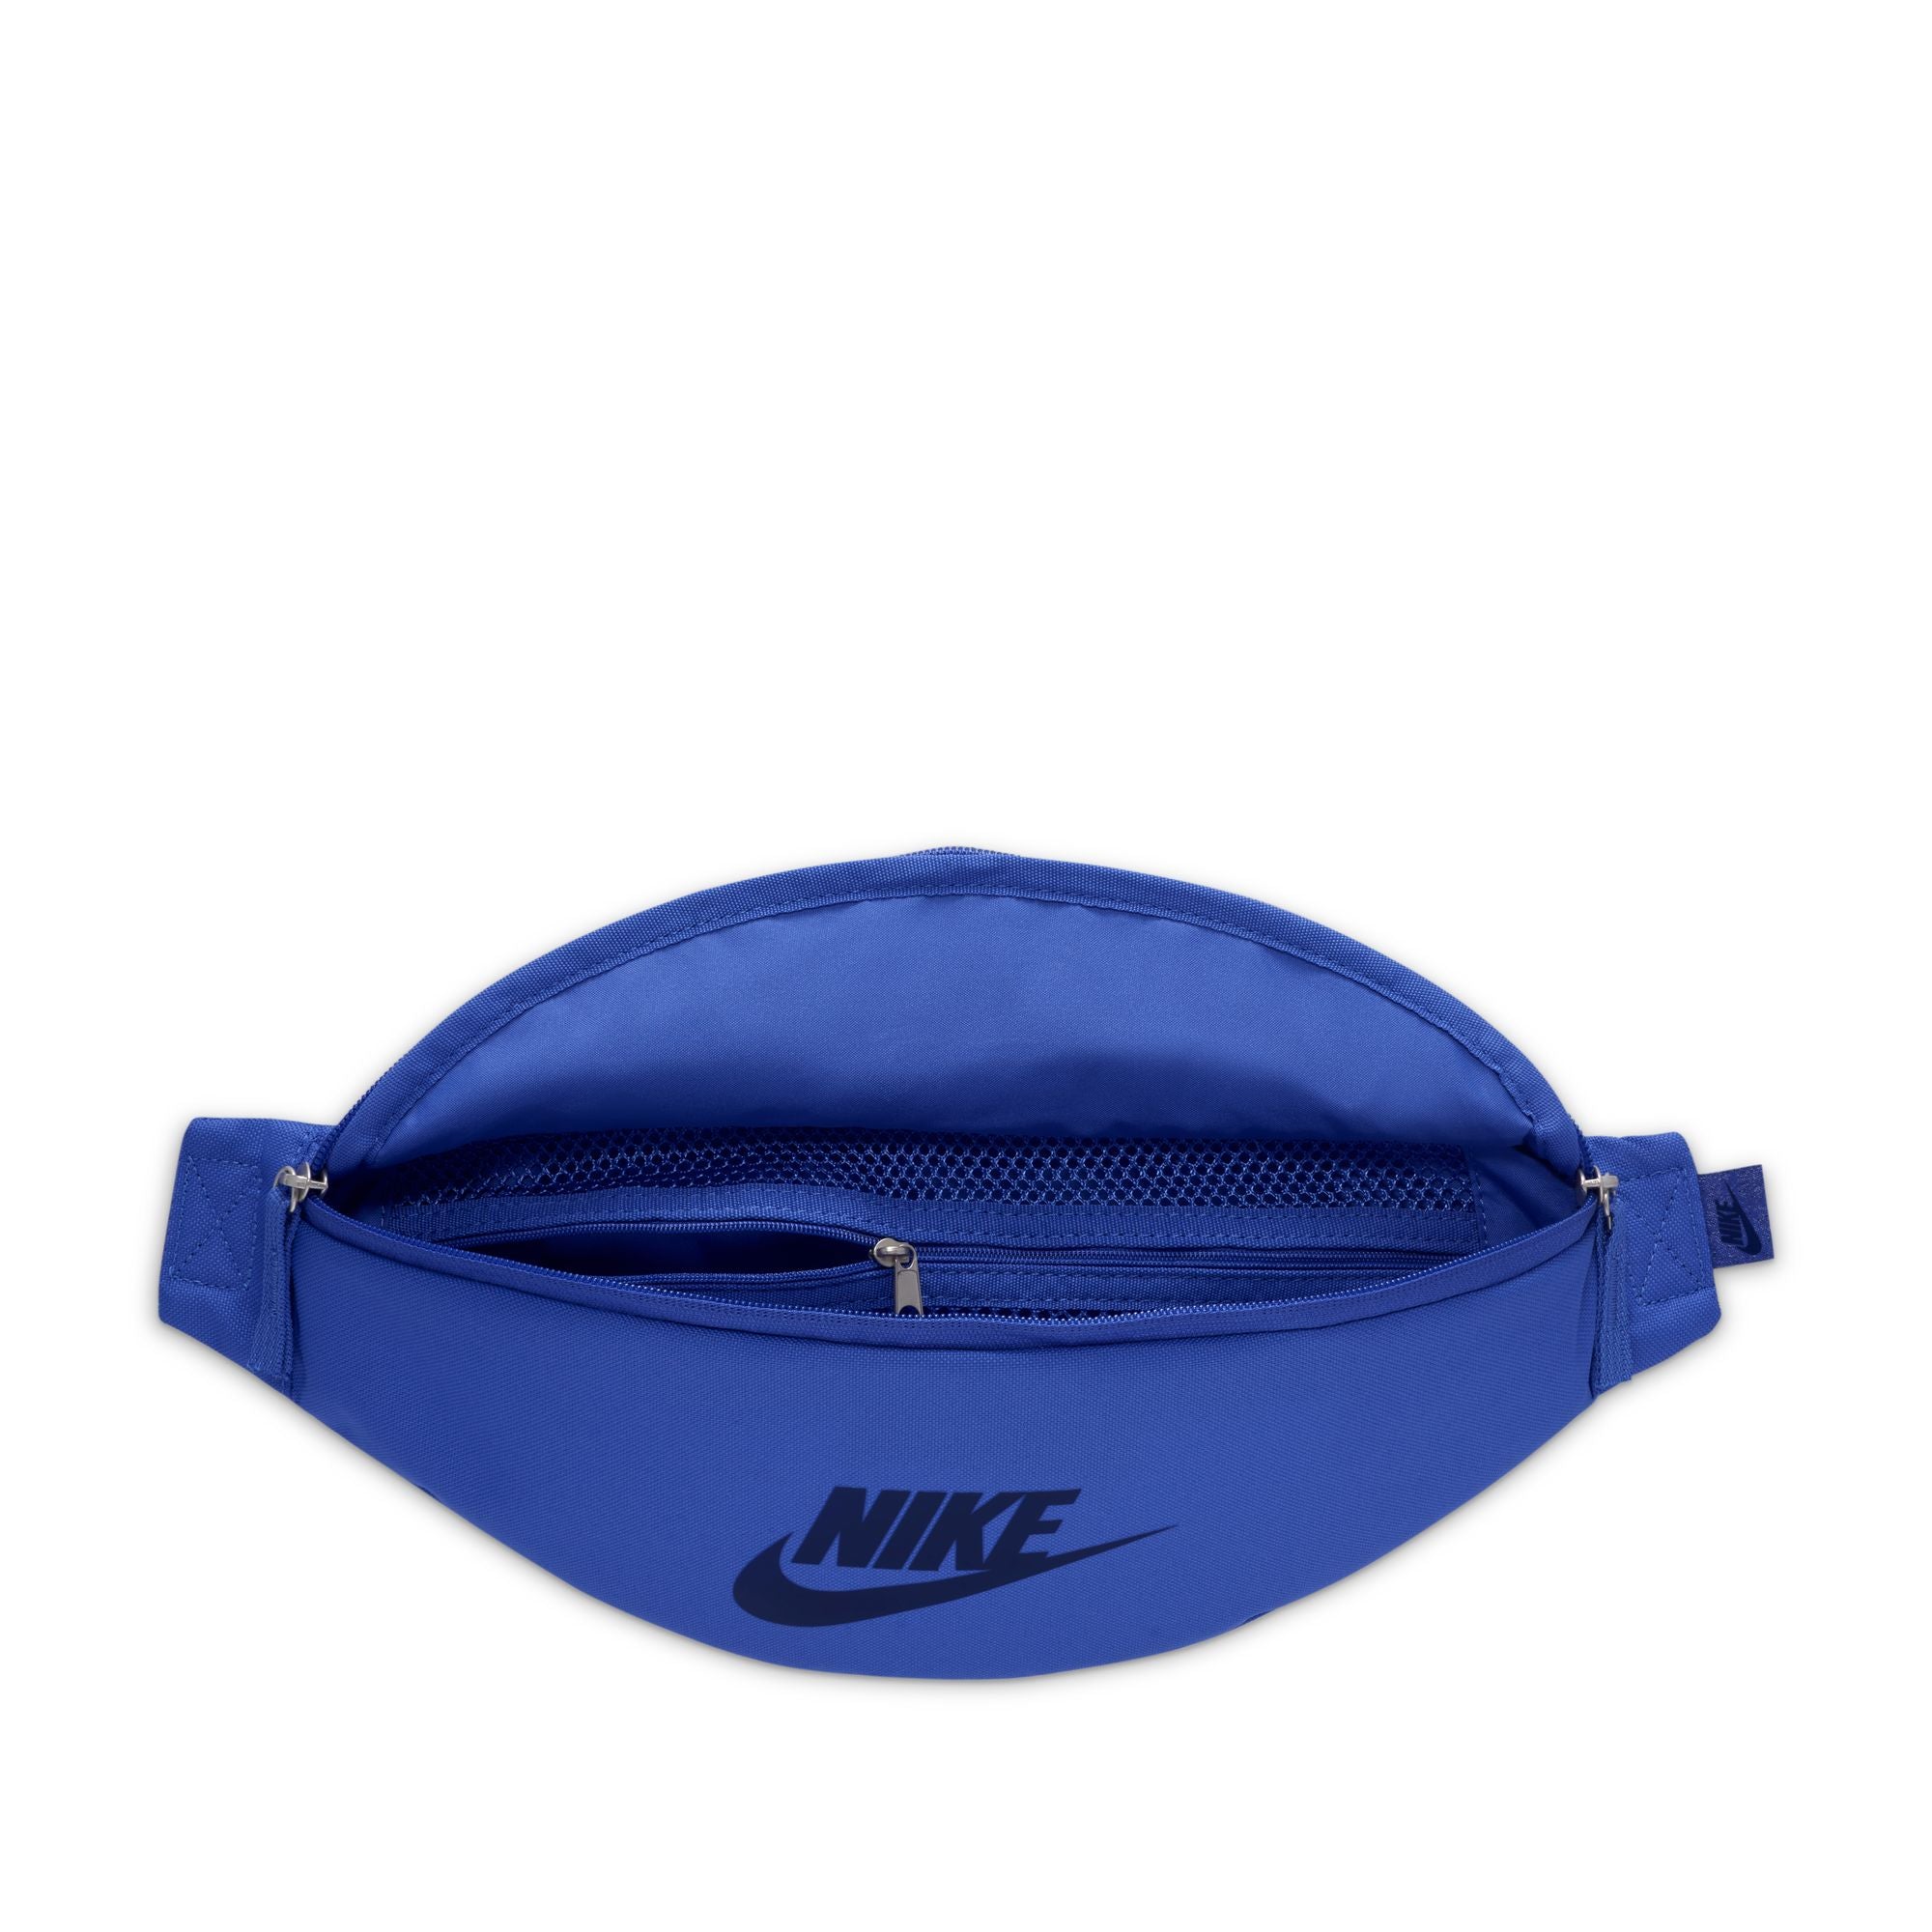 Accessories  Nike Pro Basketball Knee Pad Nba Royal Blue Nwt